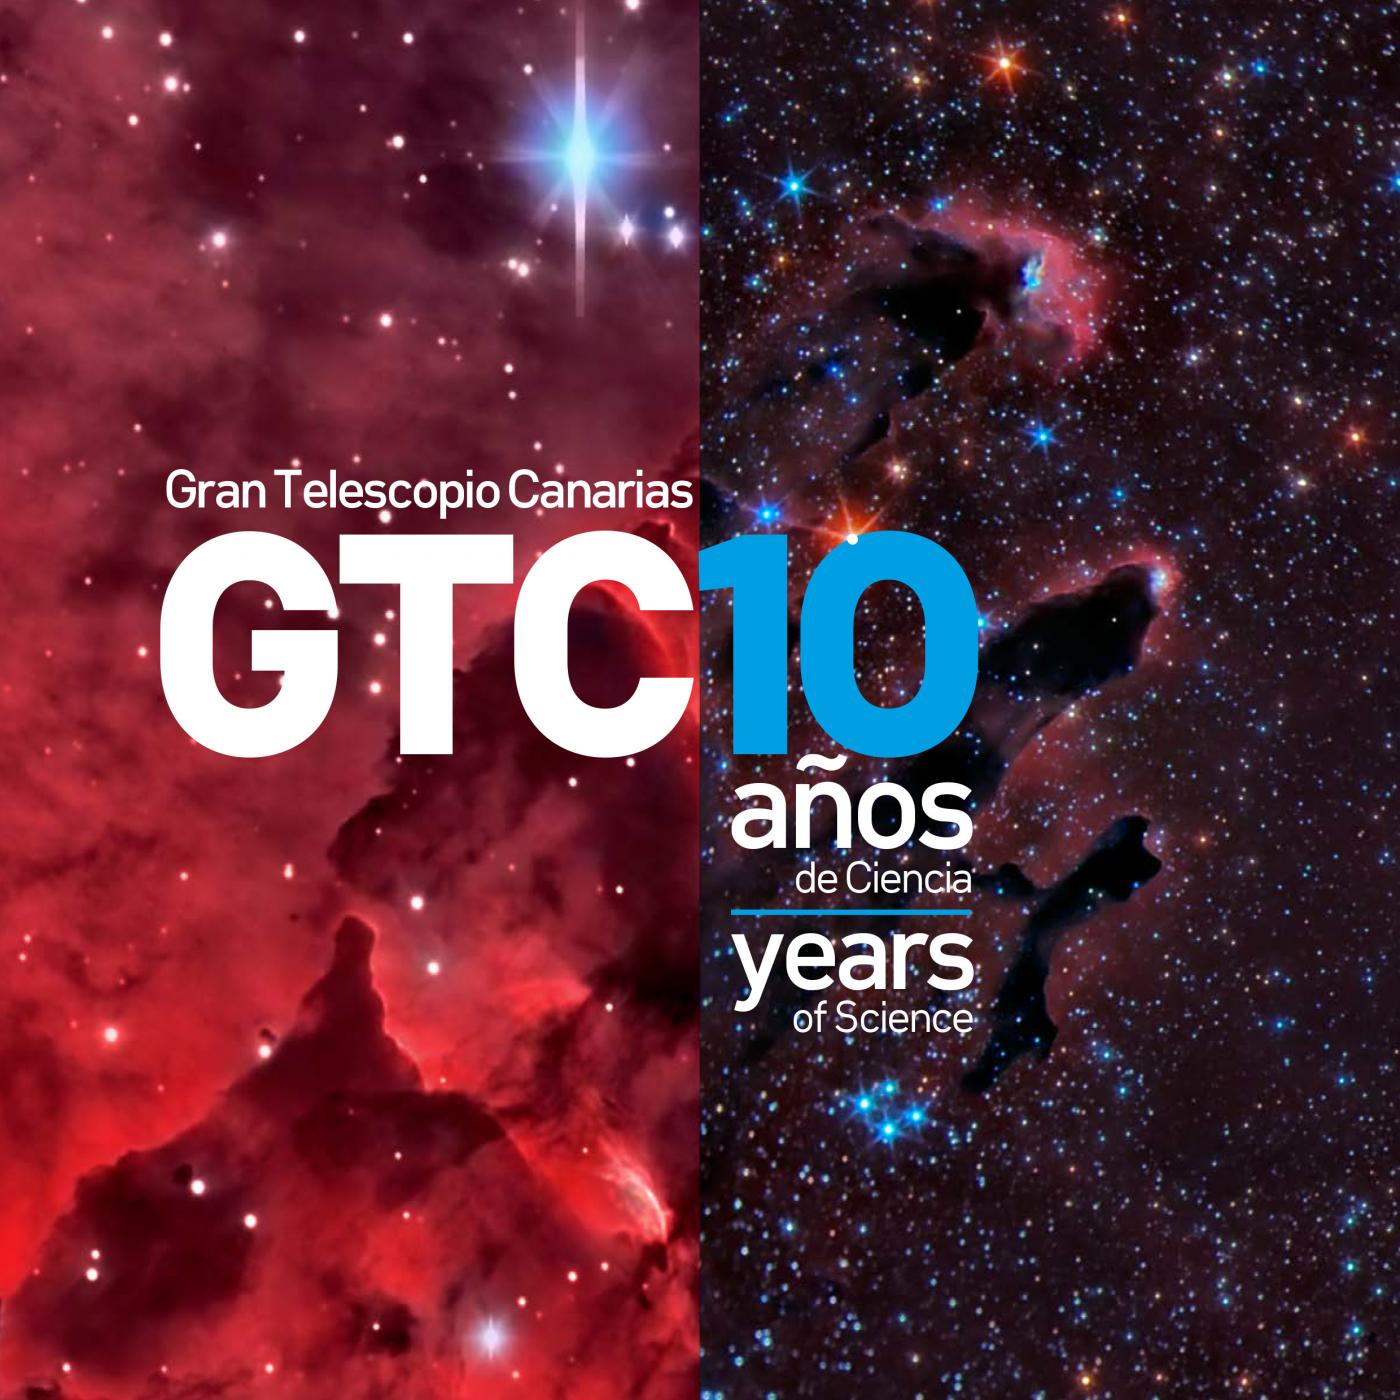 Cover leaflet "Gran Telescopio Canarias: 10 years of Science"